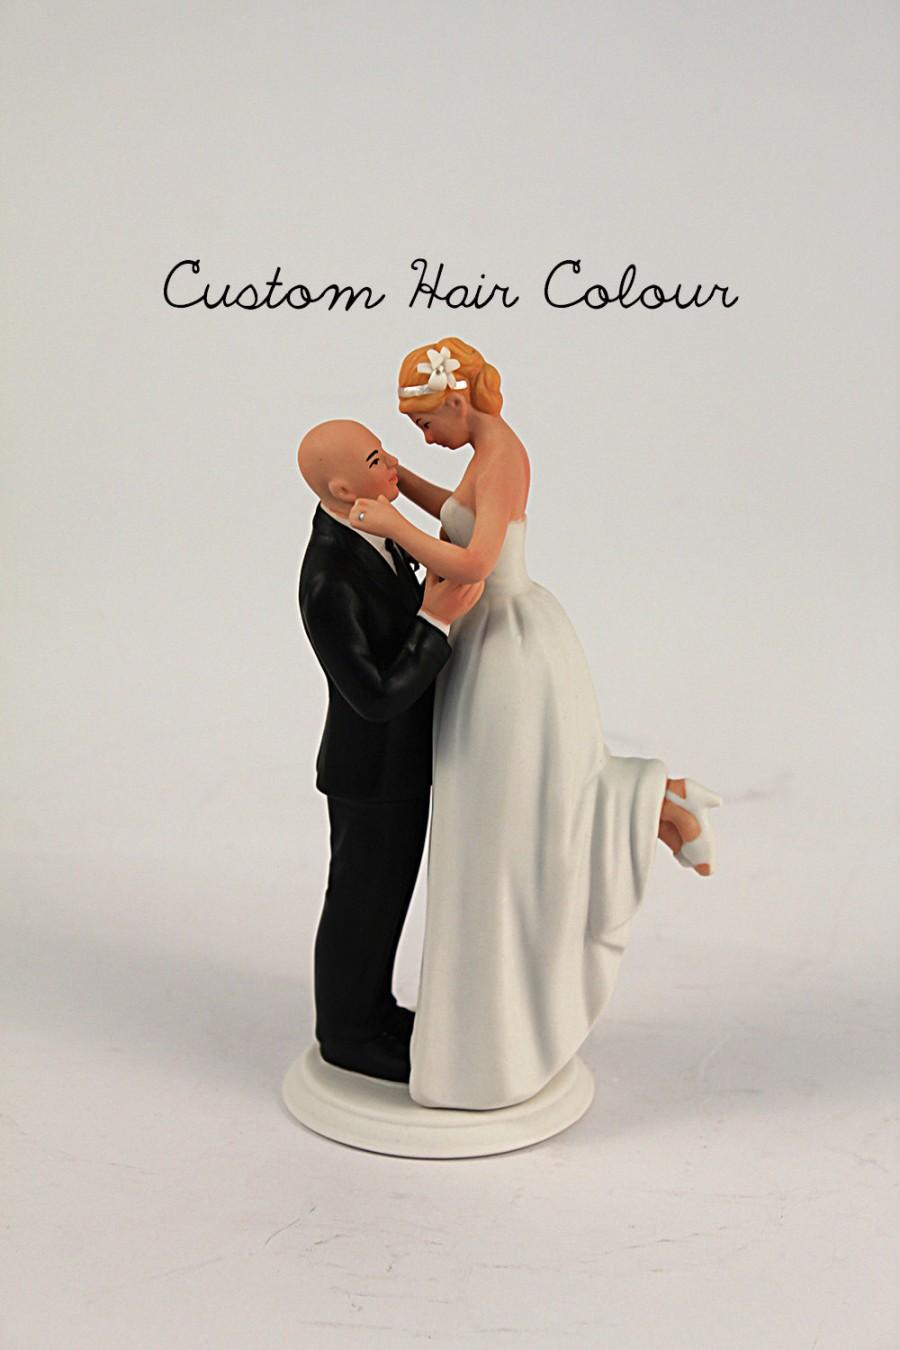 Hochzeit - True Romance Interlocking Bride and Groom Cake Topper - Medium Skin Tone Bald Groom and Light Skin Tone Bride - Personalized Wedding Toppers